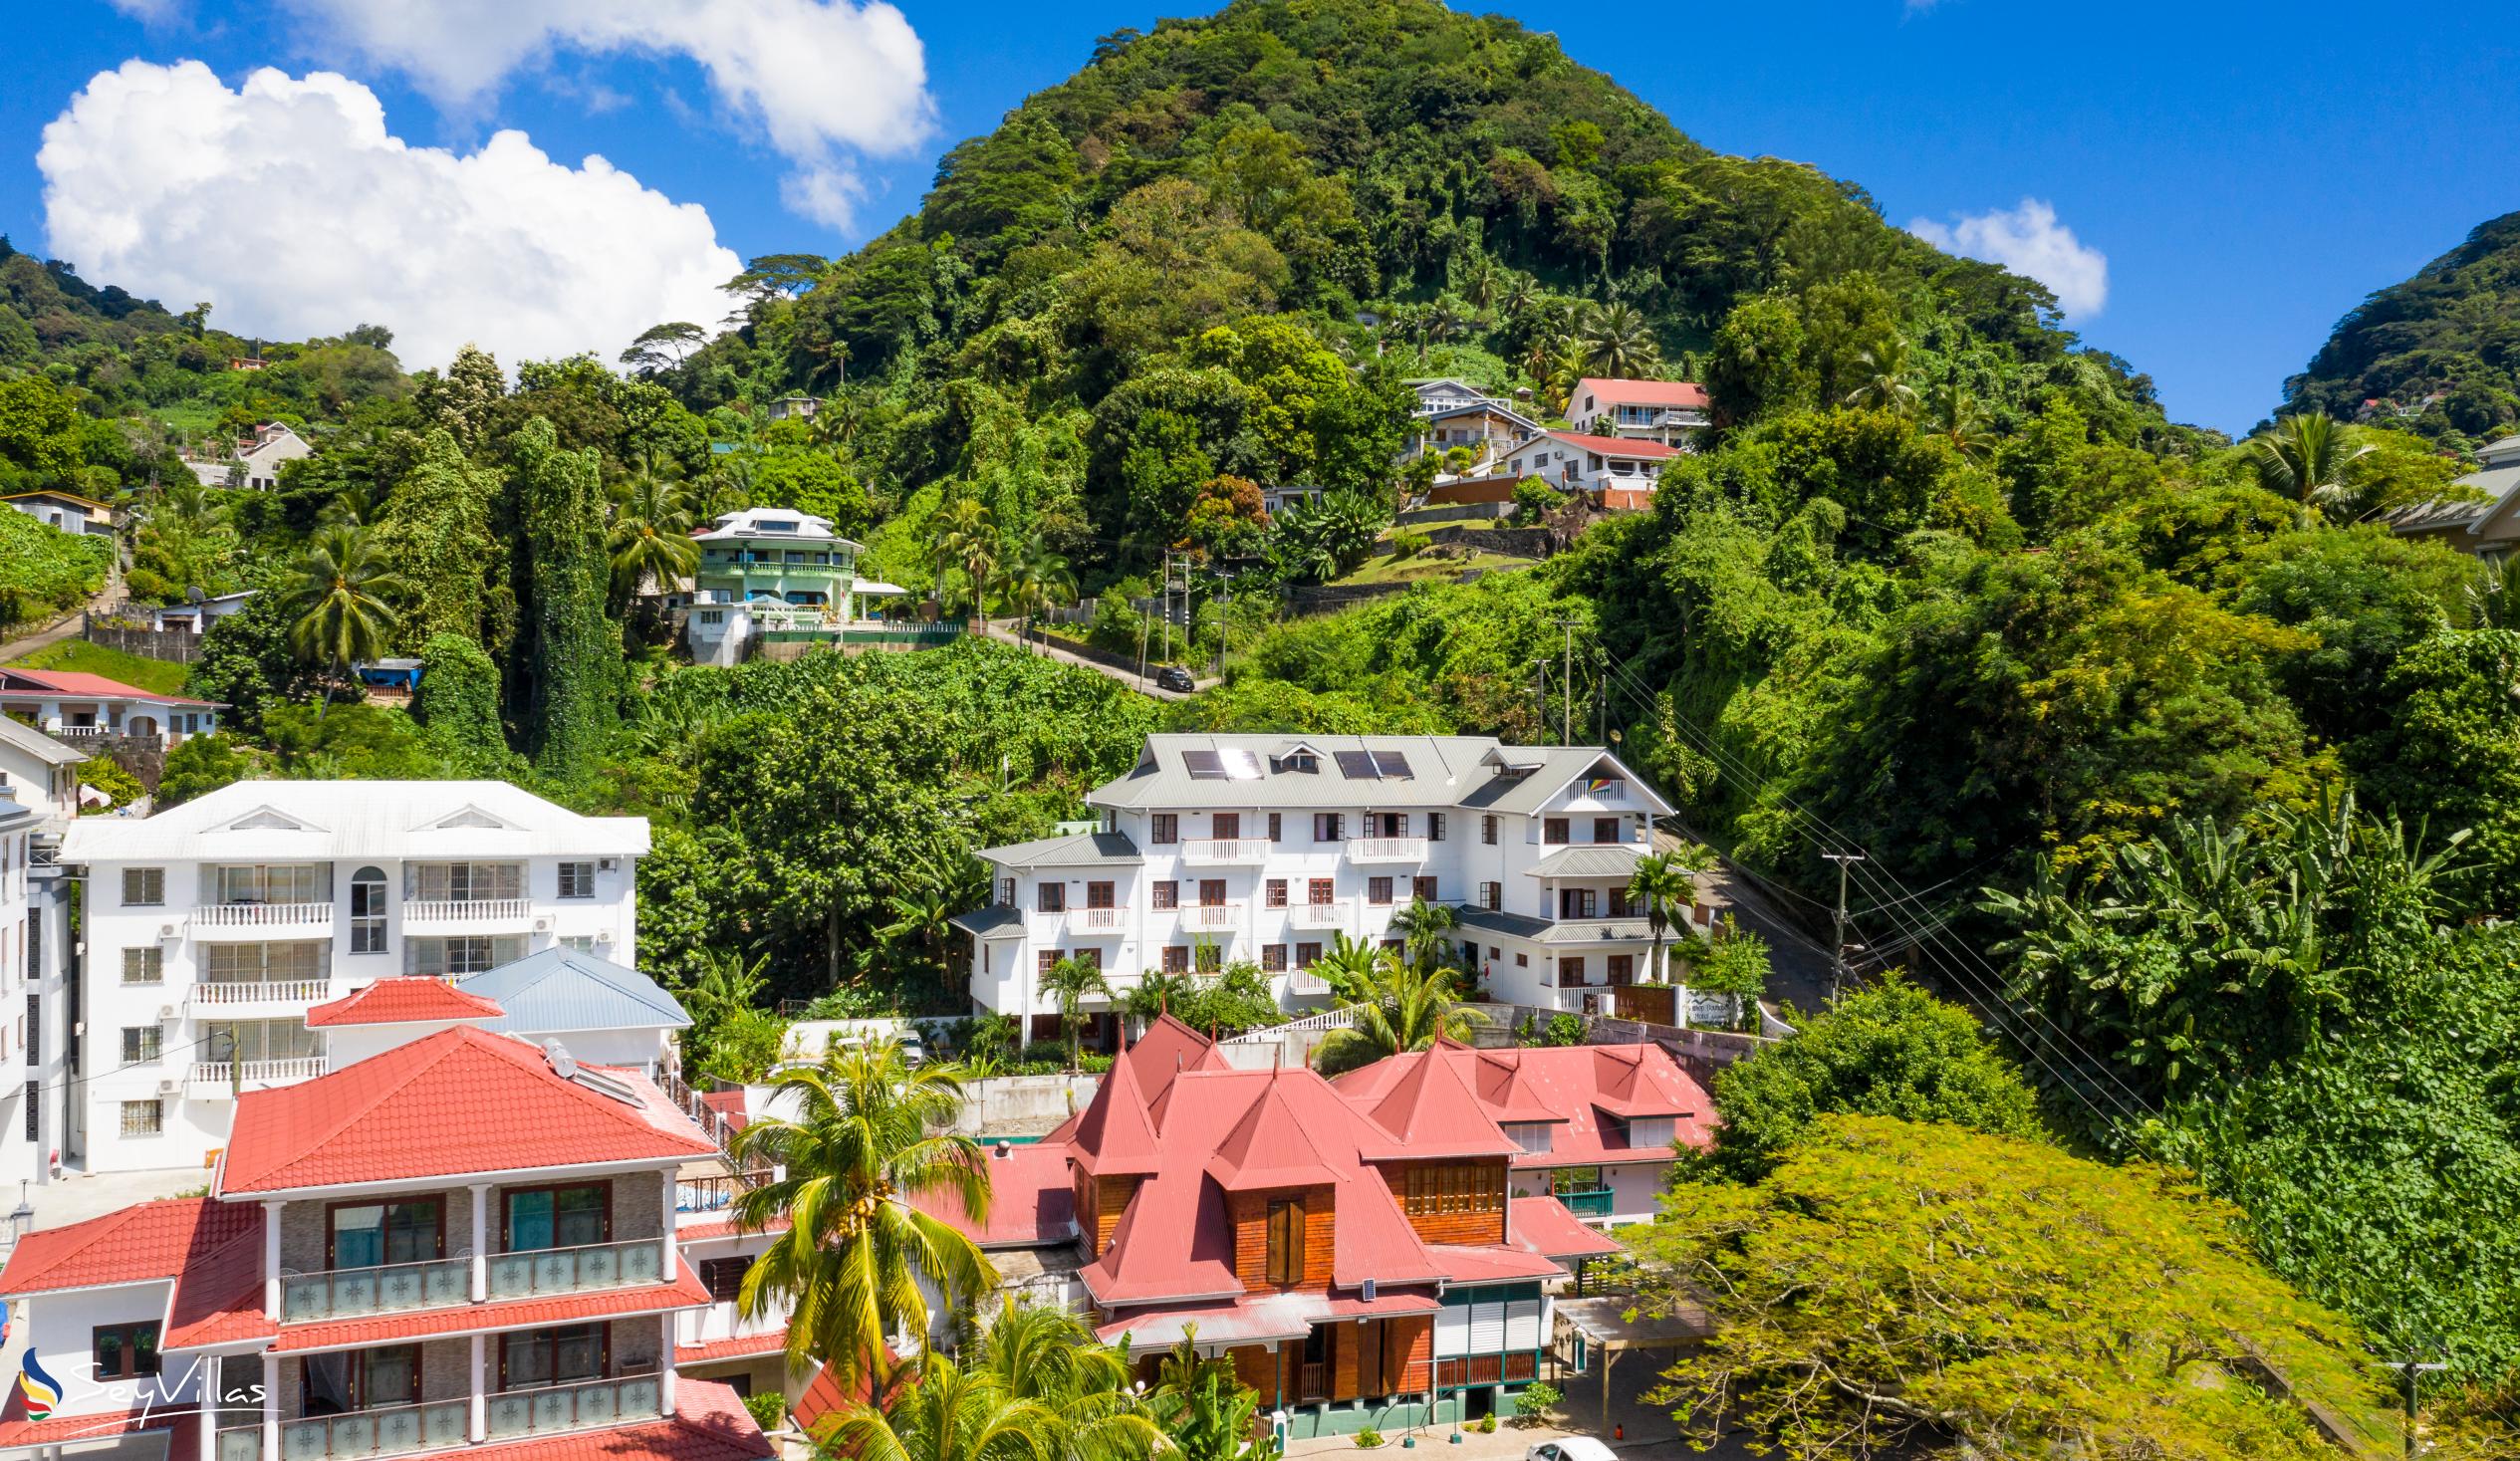 Foto 21: Hilltop Boutique Hotel - Posizione - Mahé (Seychelles)